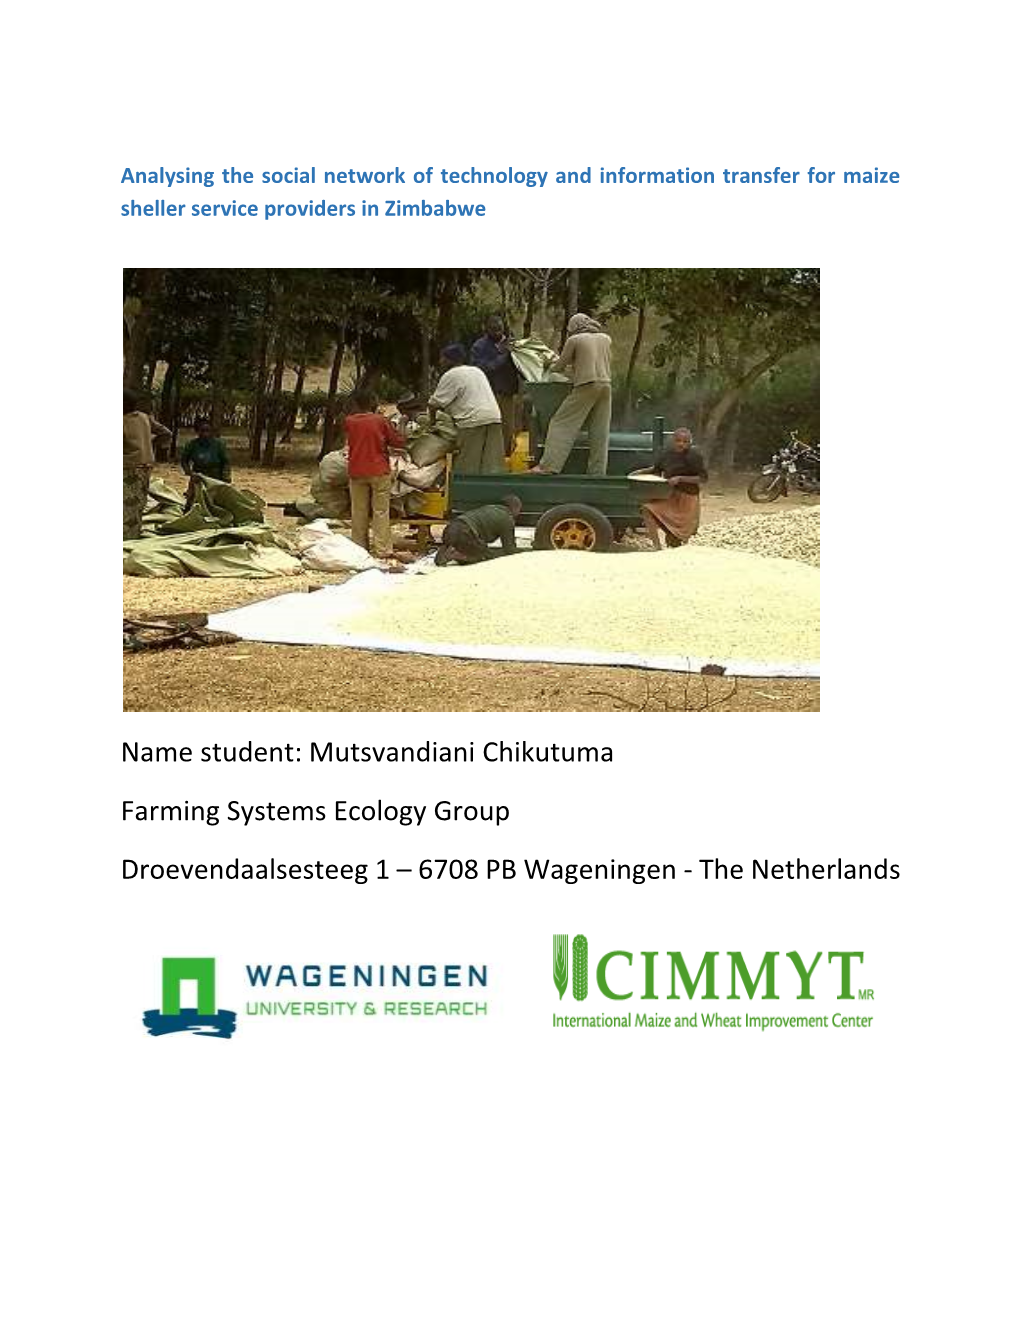 Mutsvandiani Chikutuma Farming Systems Ecology Group Droevendaalsesteeg 1 – 6708 PB Wageningen - the Netherlands